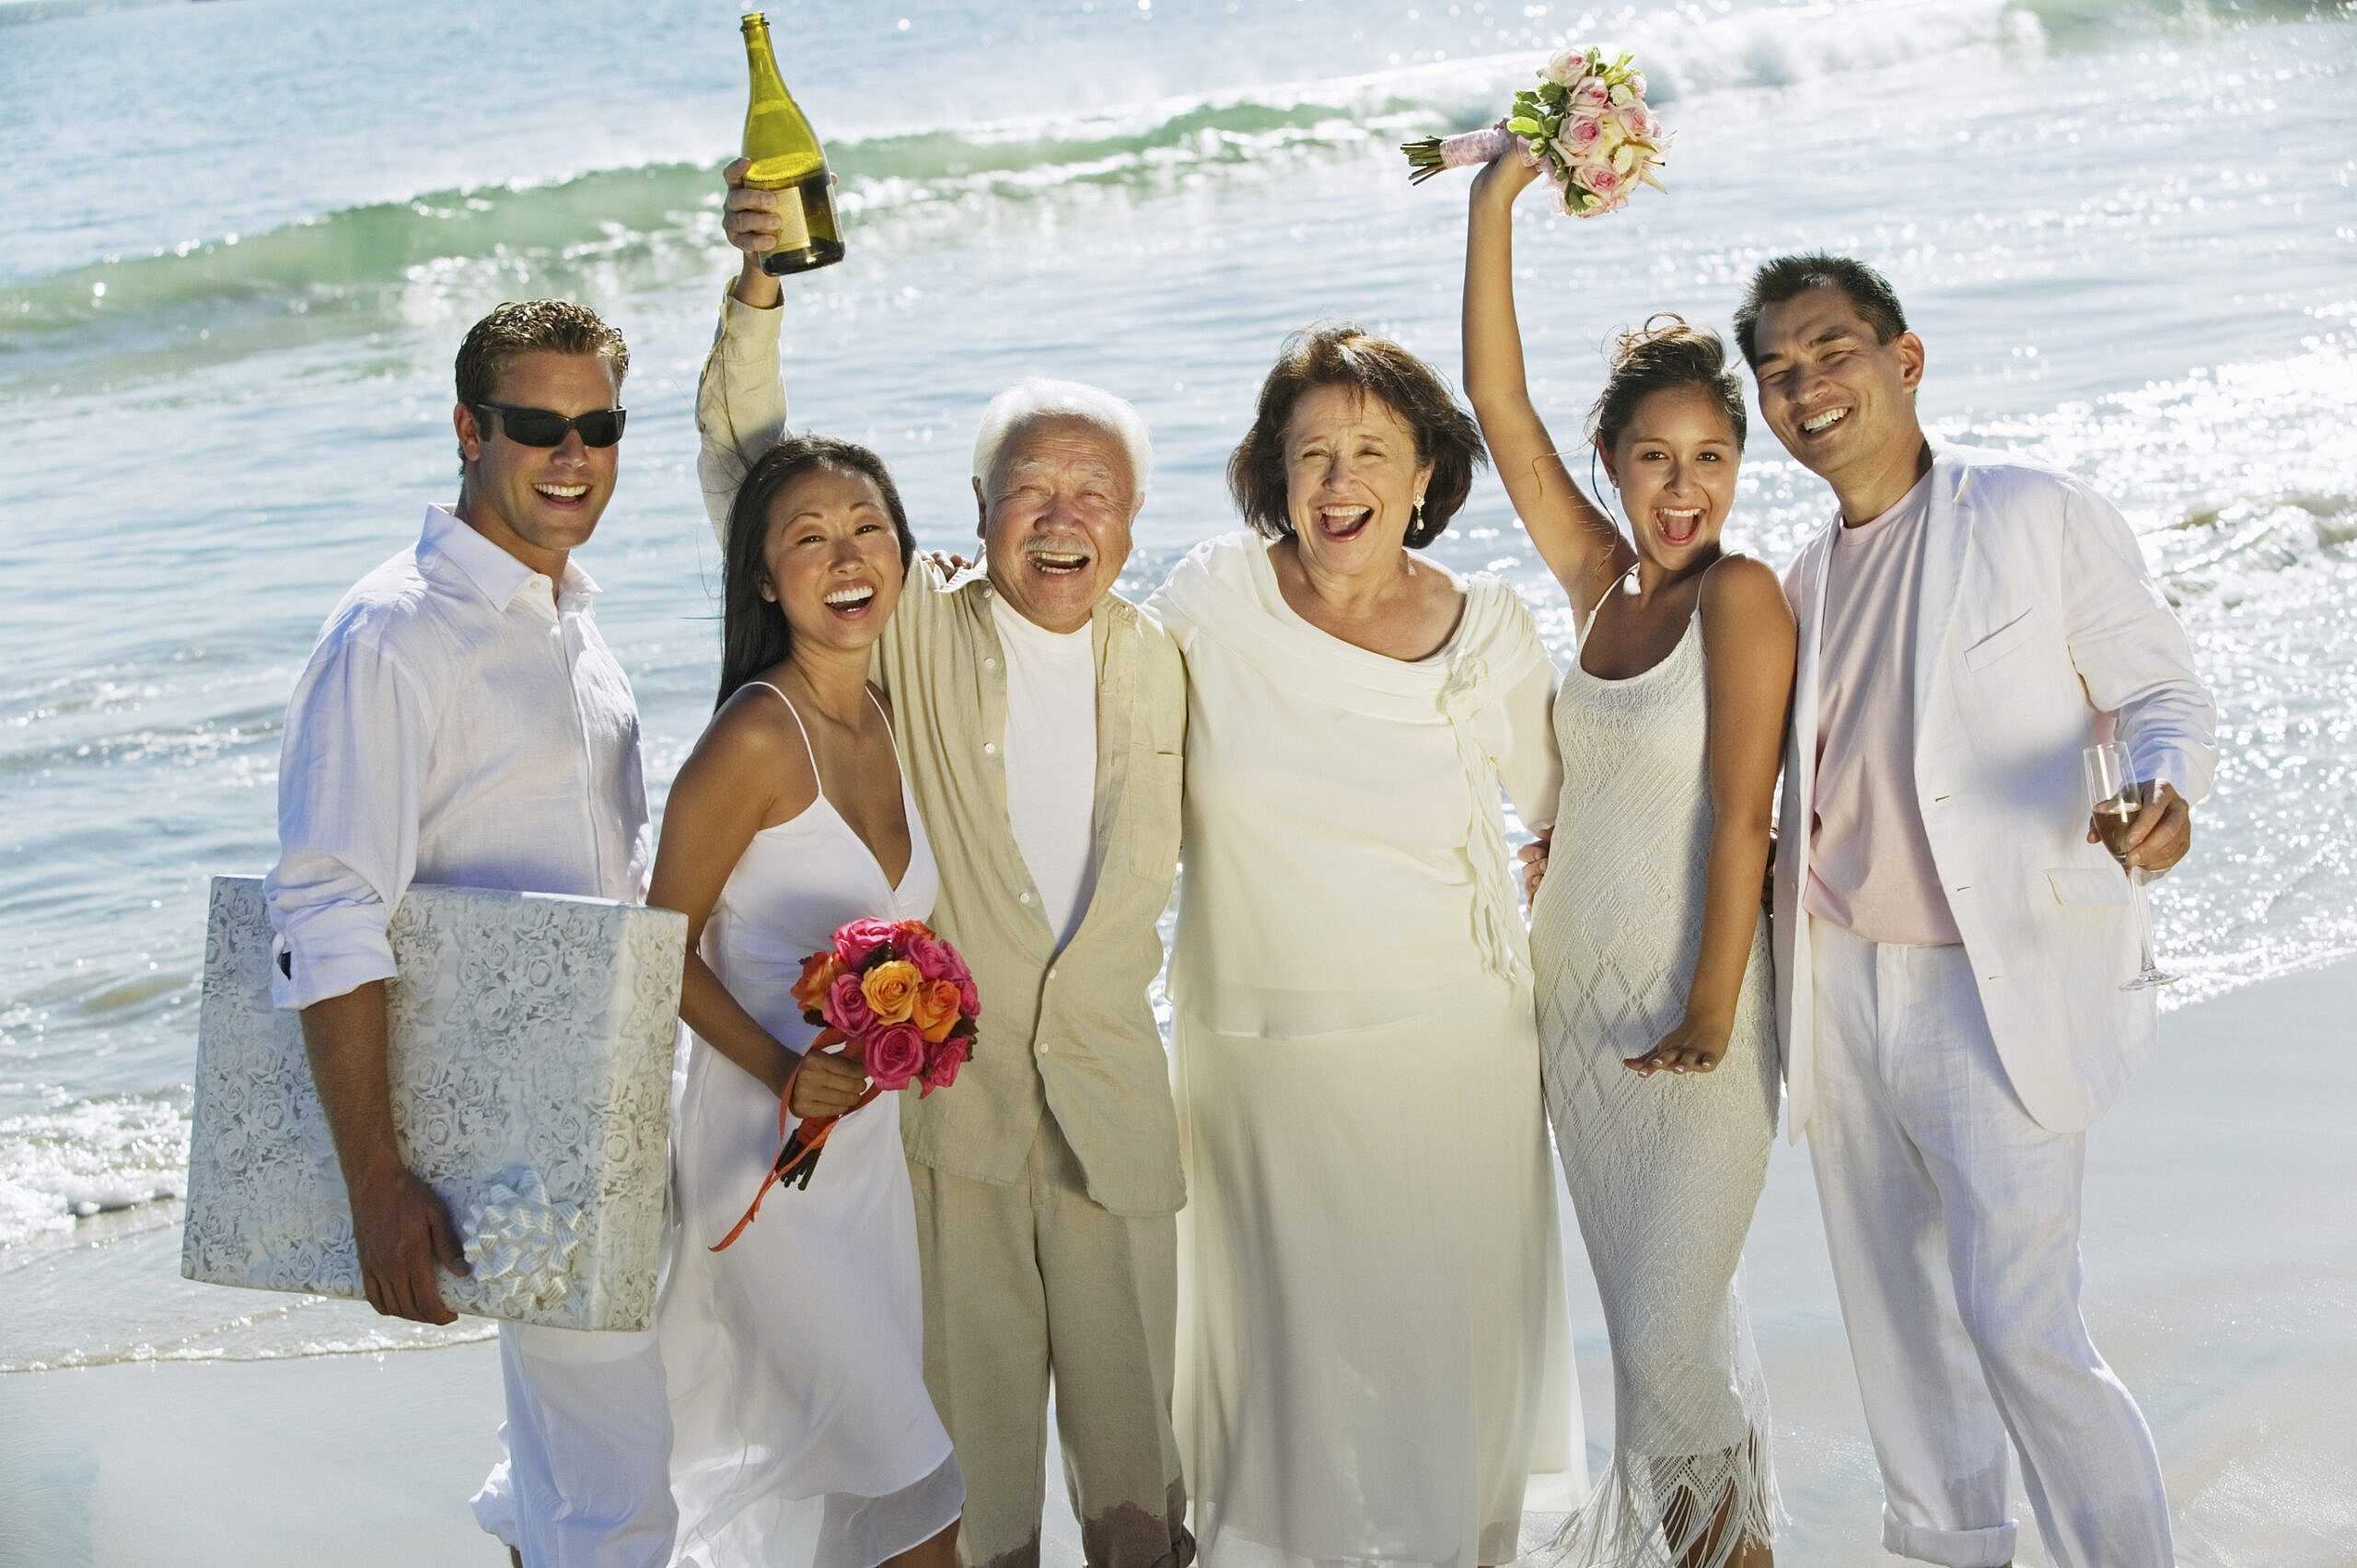 Desination Beach Weddings Dominican Republic | www.resortsdr.com